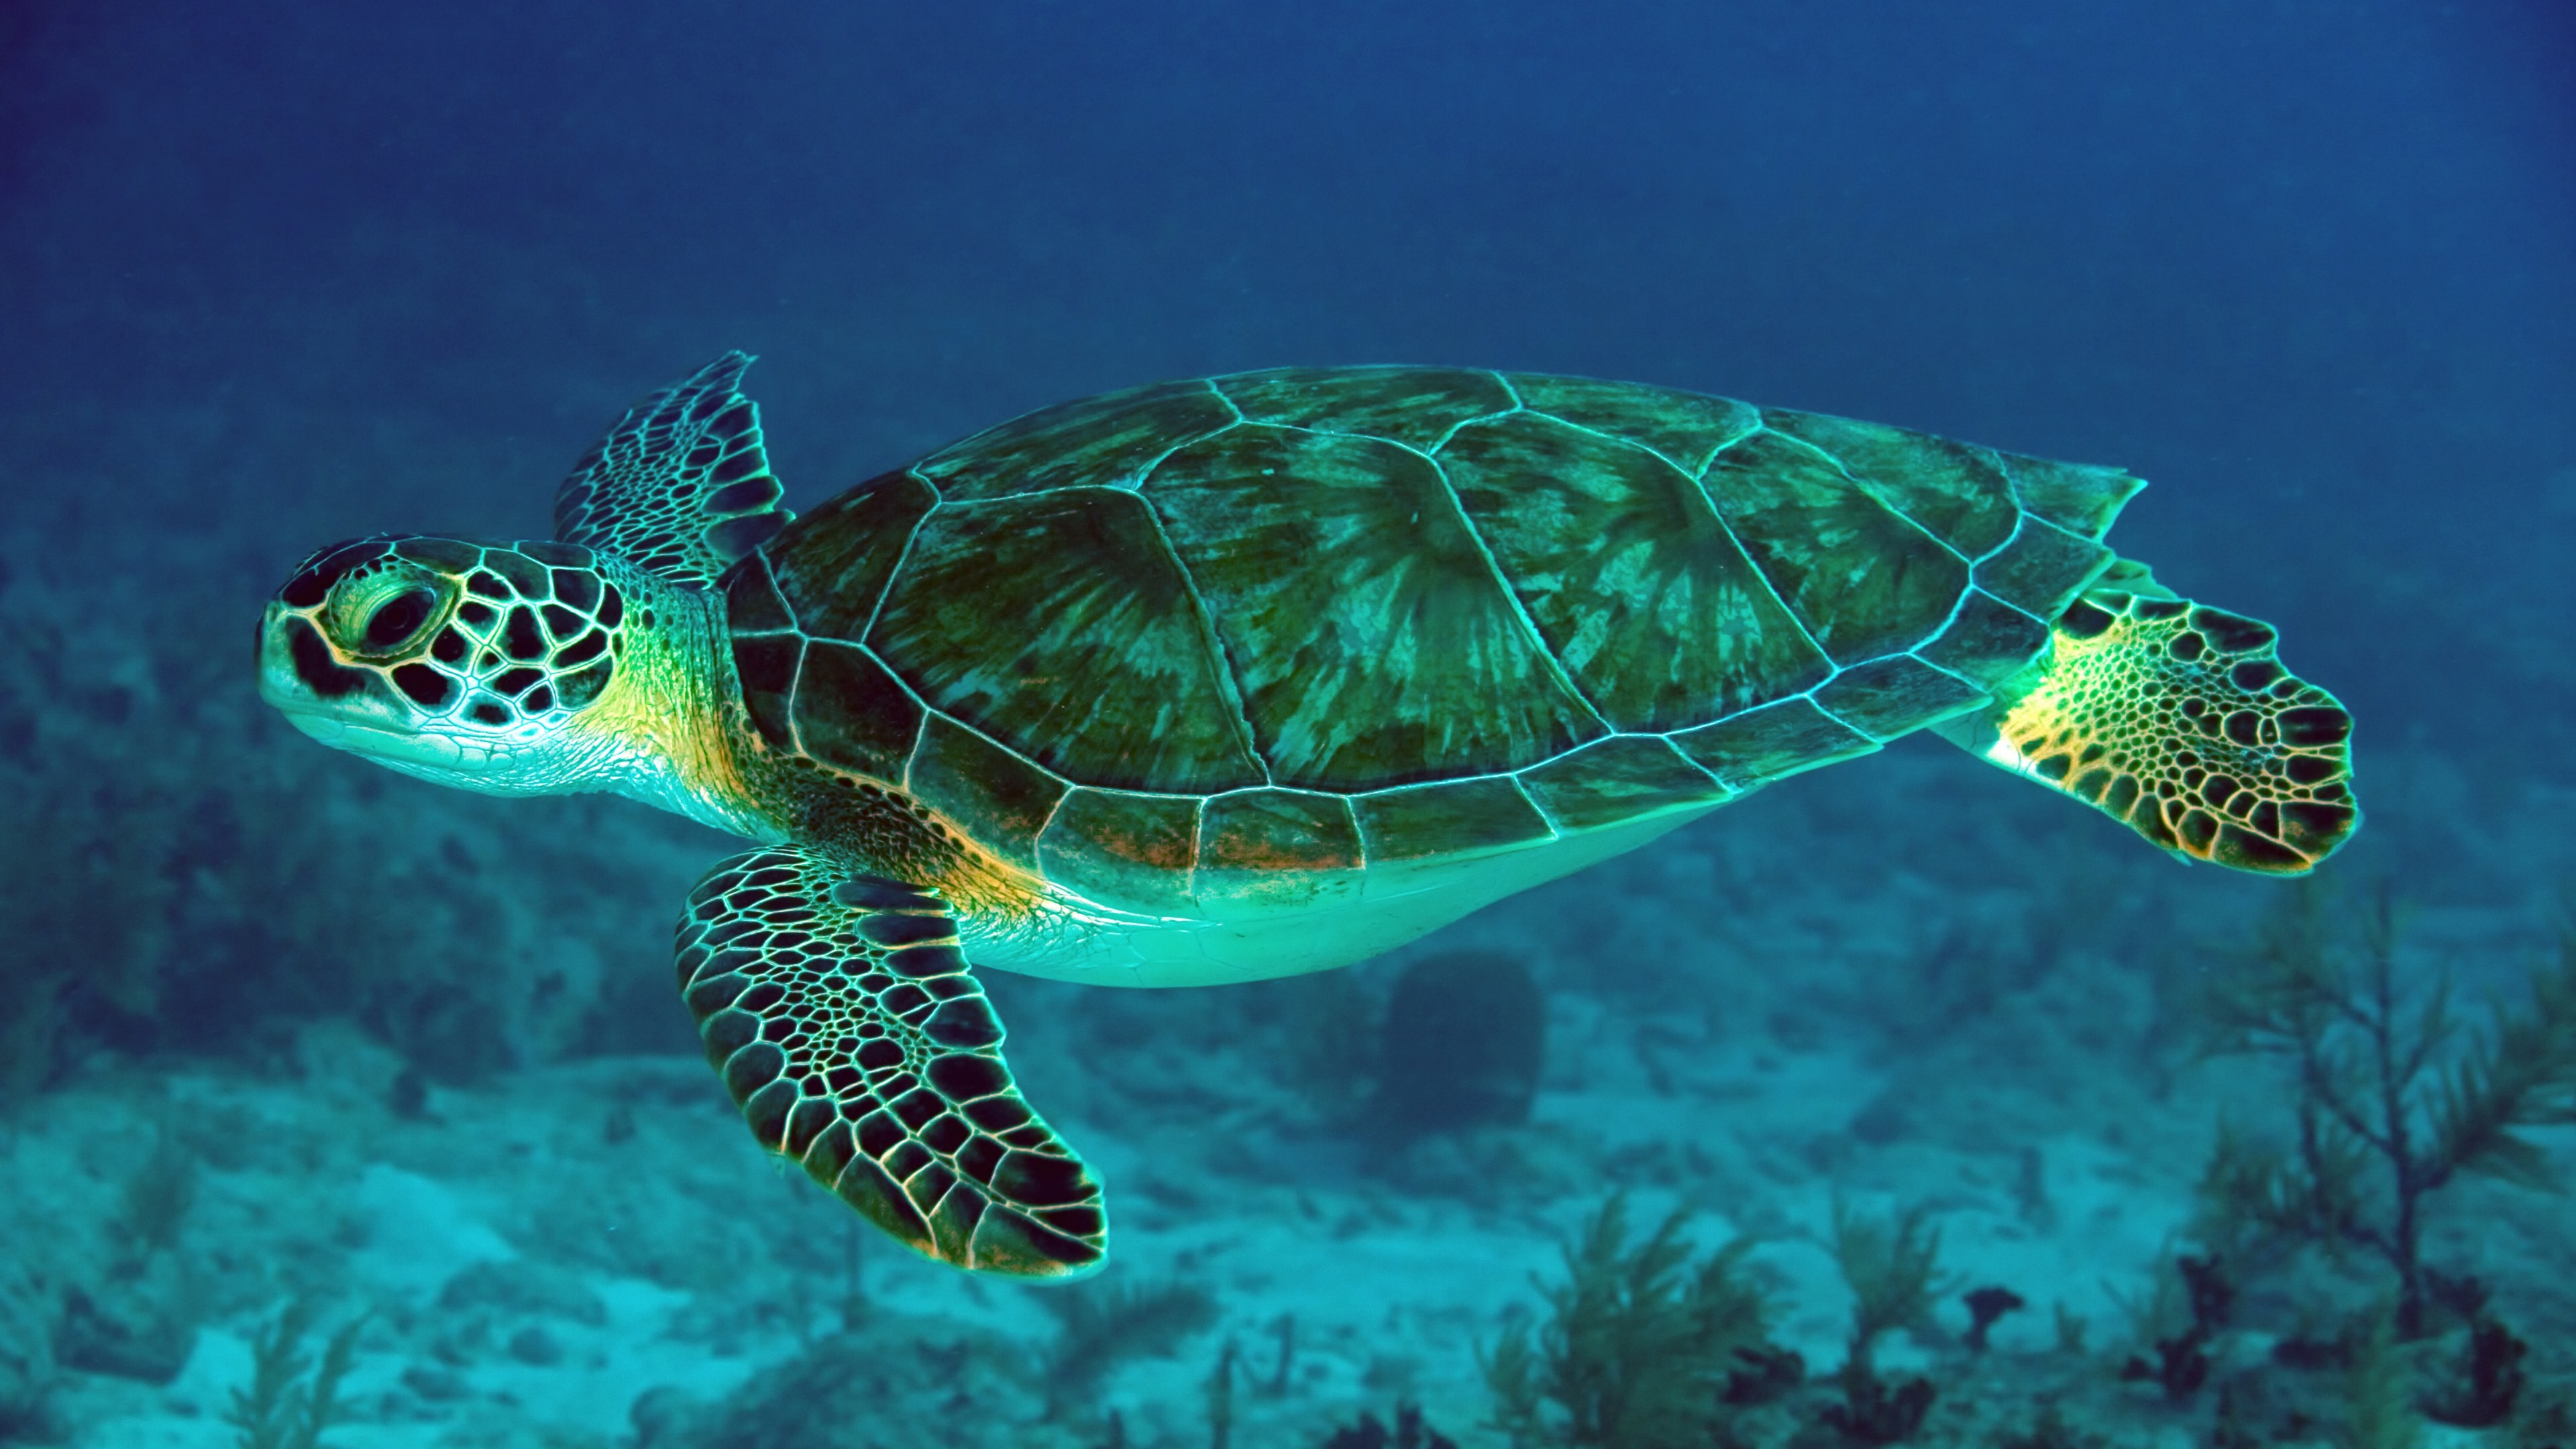 3840x2160 Sea Turtle 4k Ultra HD Wallpaper | Background Image |  | ID:465304  - Wallpaper Abyss